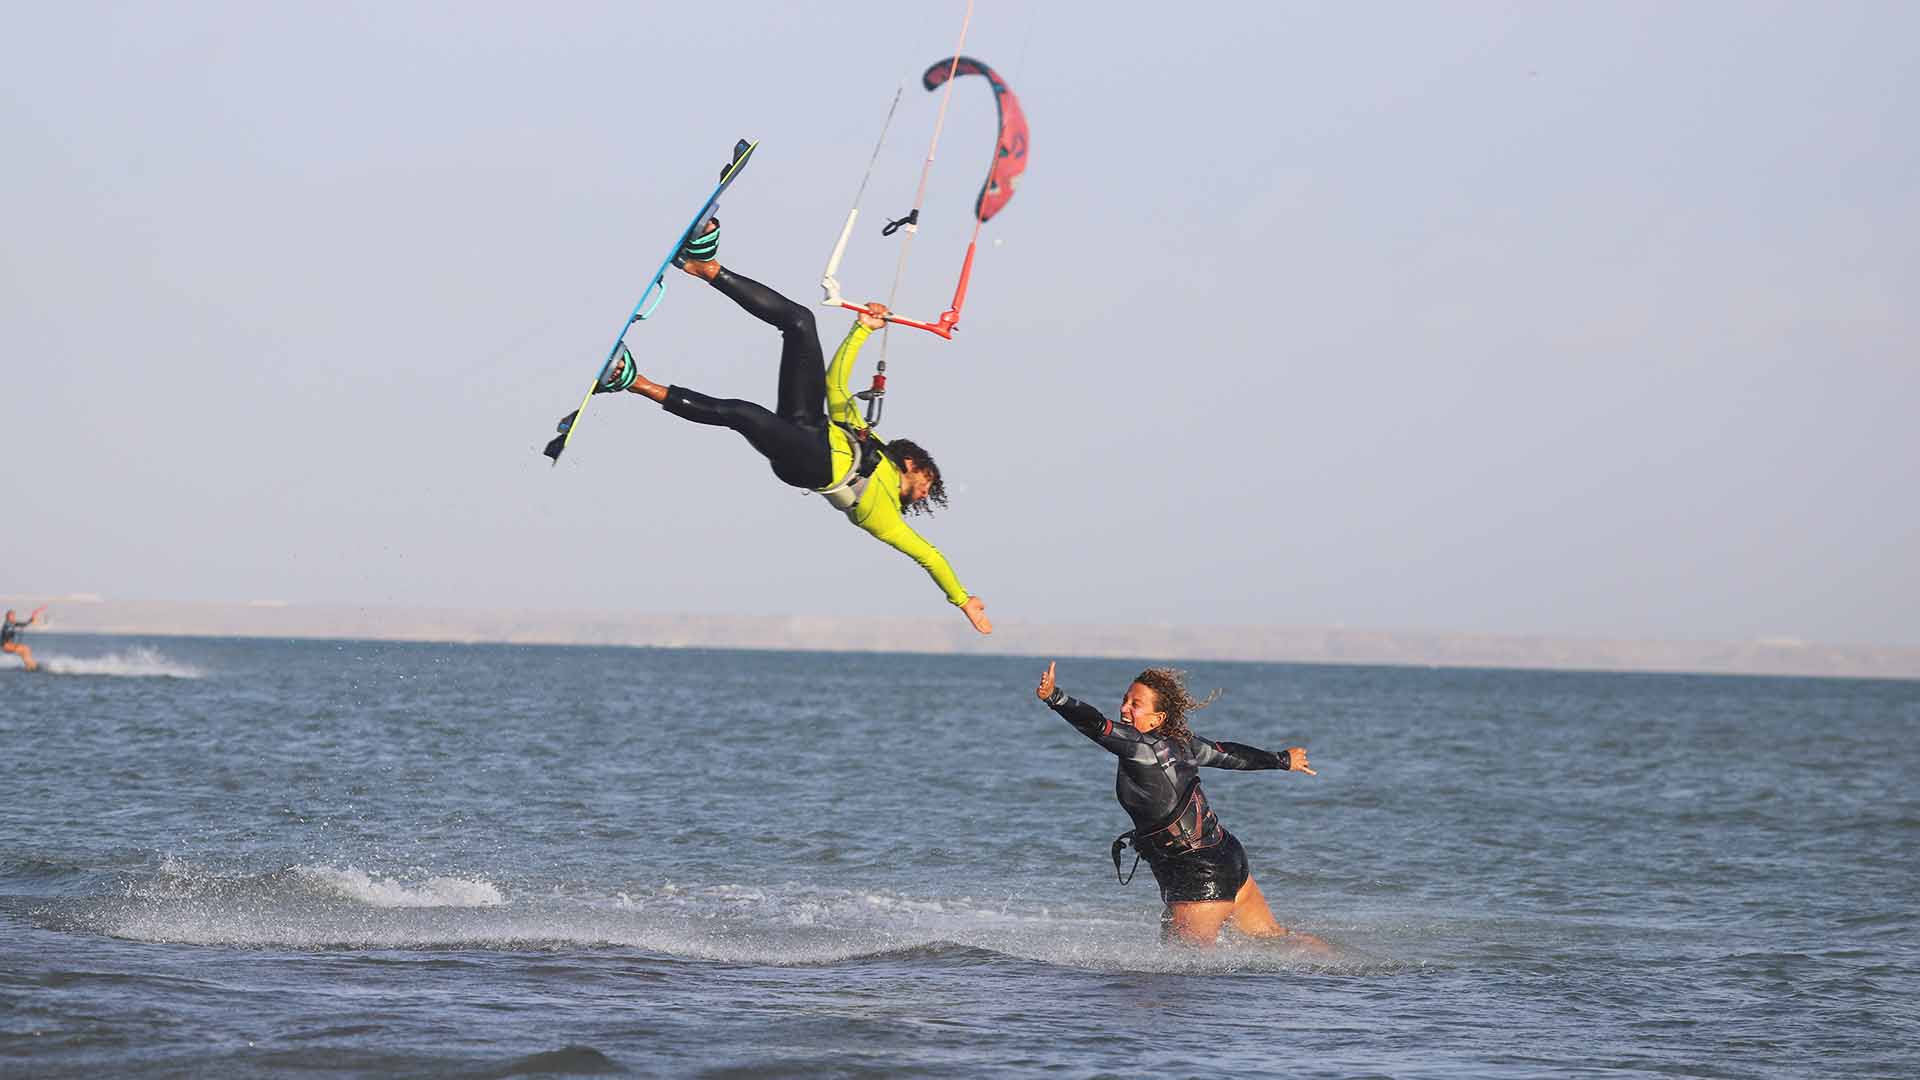 kitesurf in action on the spot of dakhla lassarga